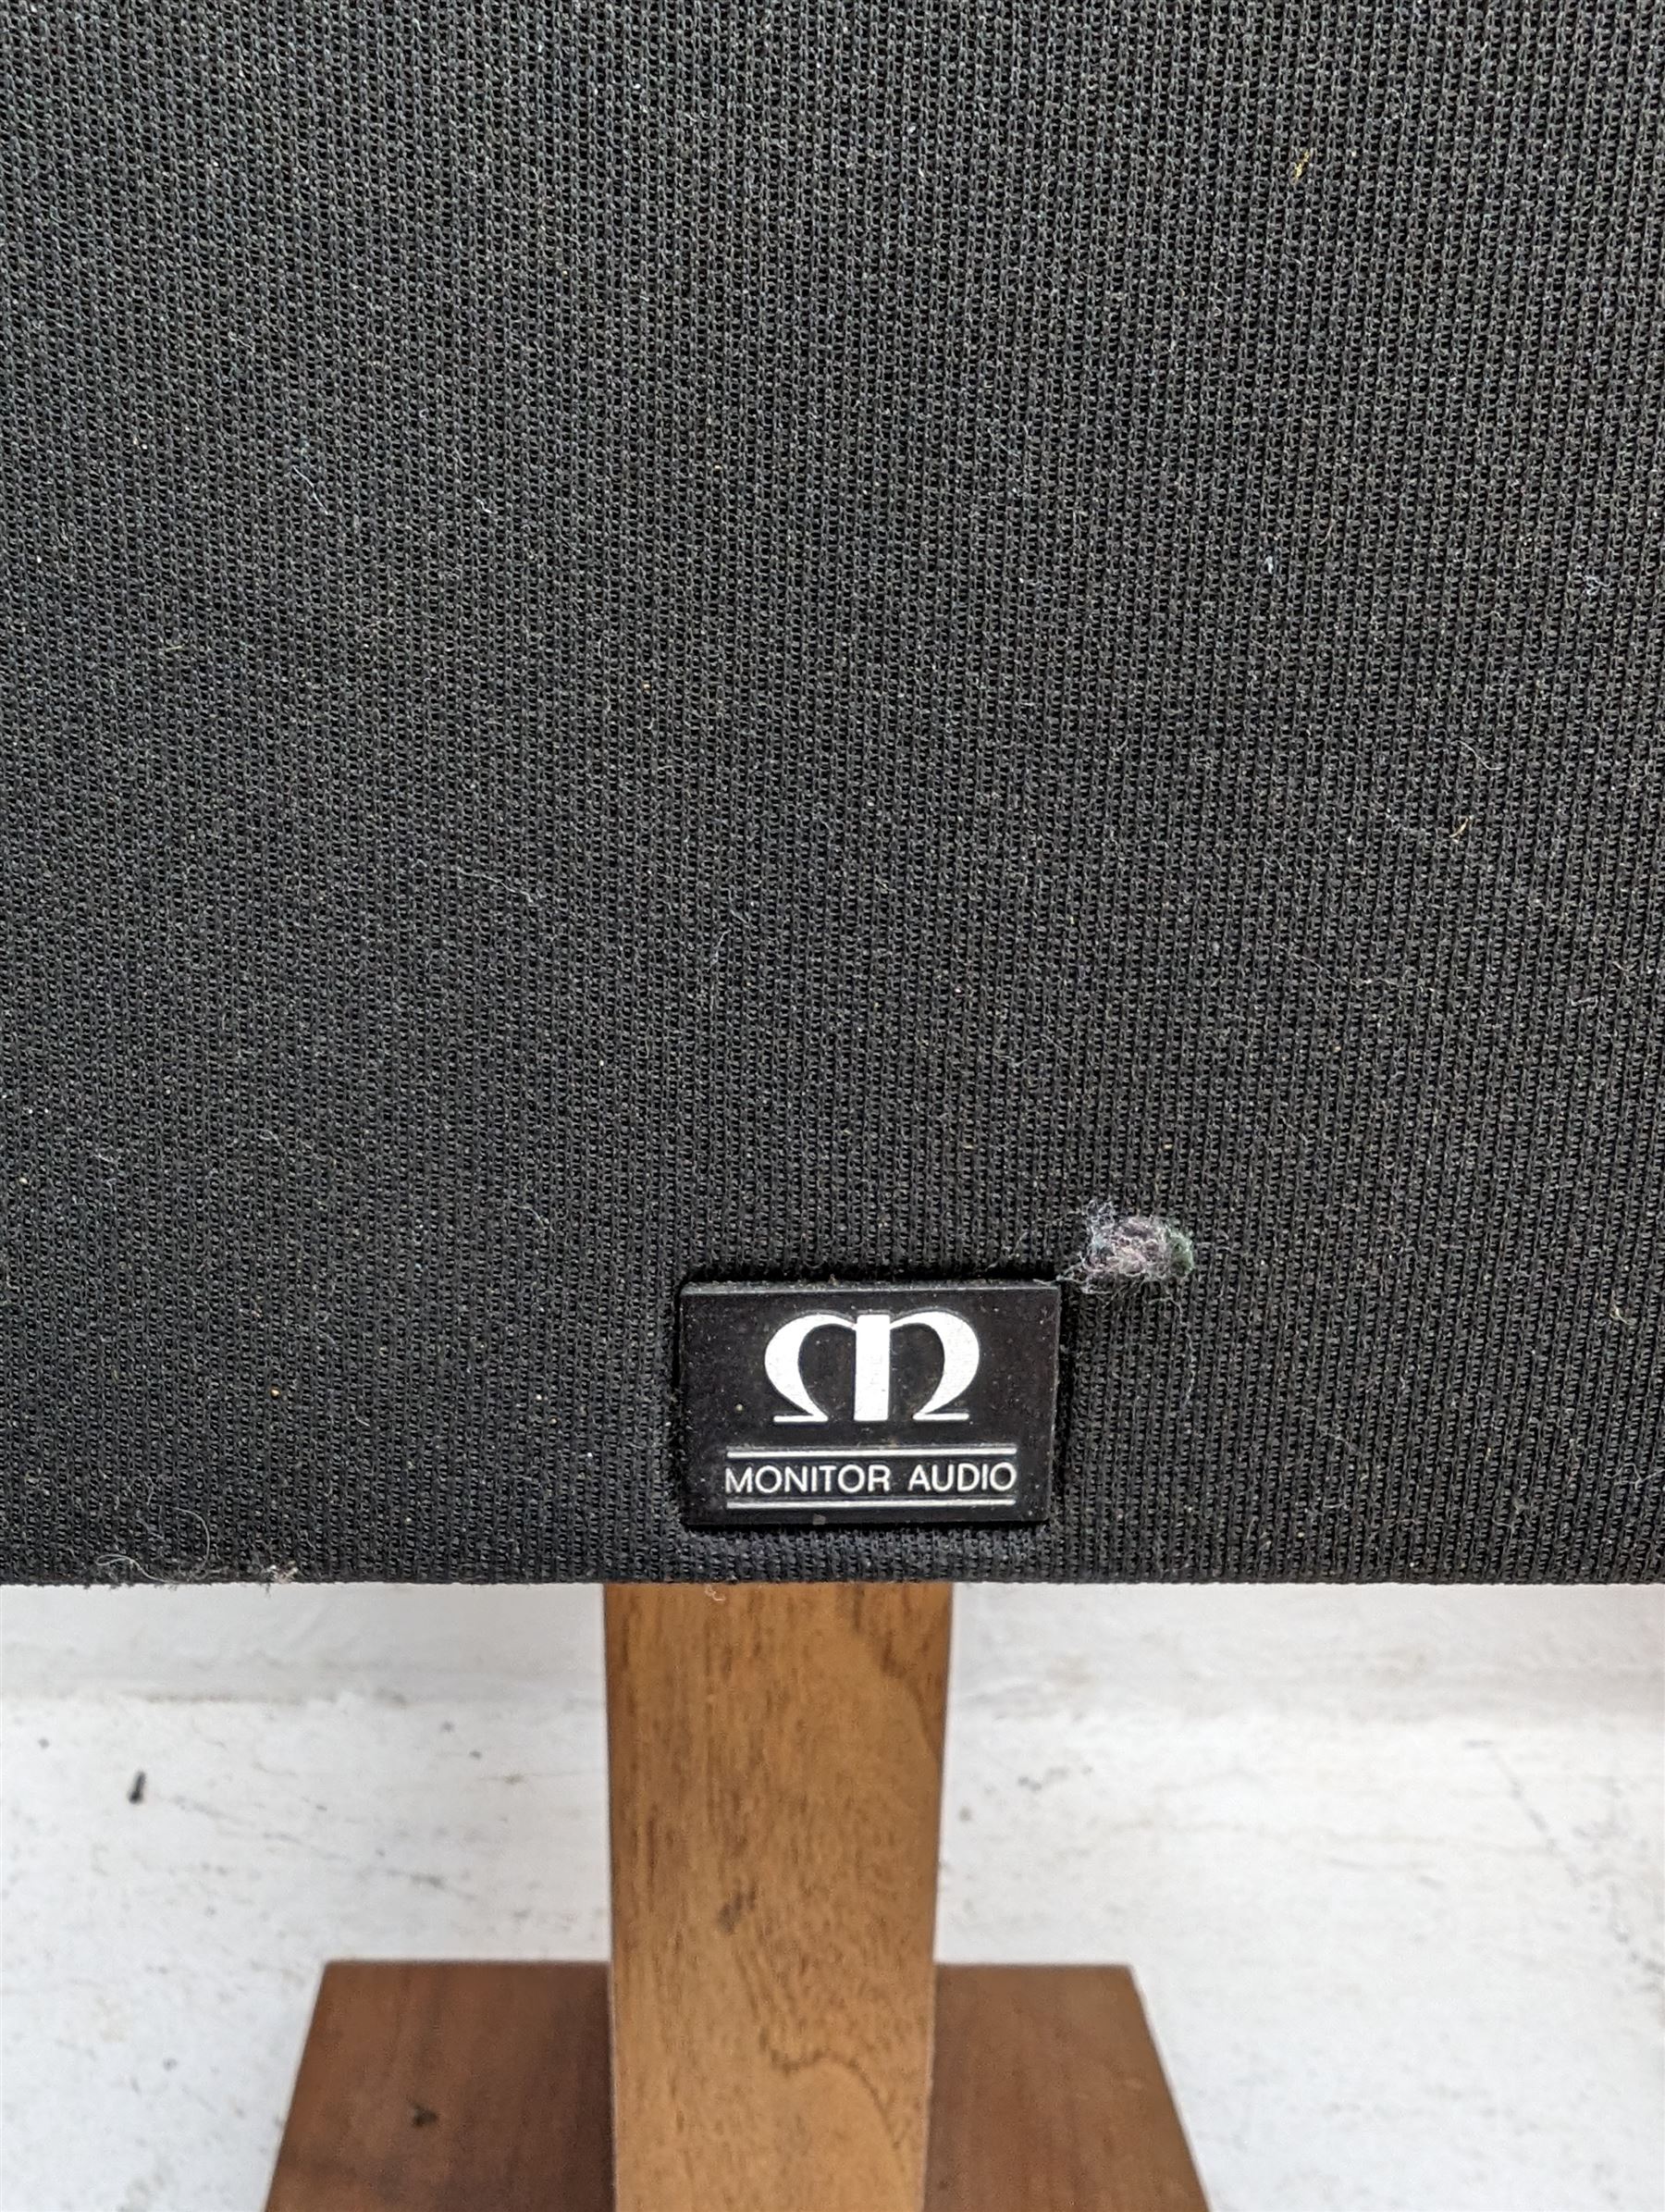 Monitor Audio - pair of walnut cased floor standing speakers - Image 2 of 5